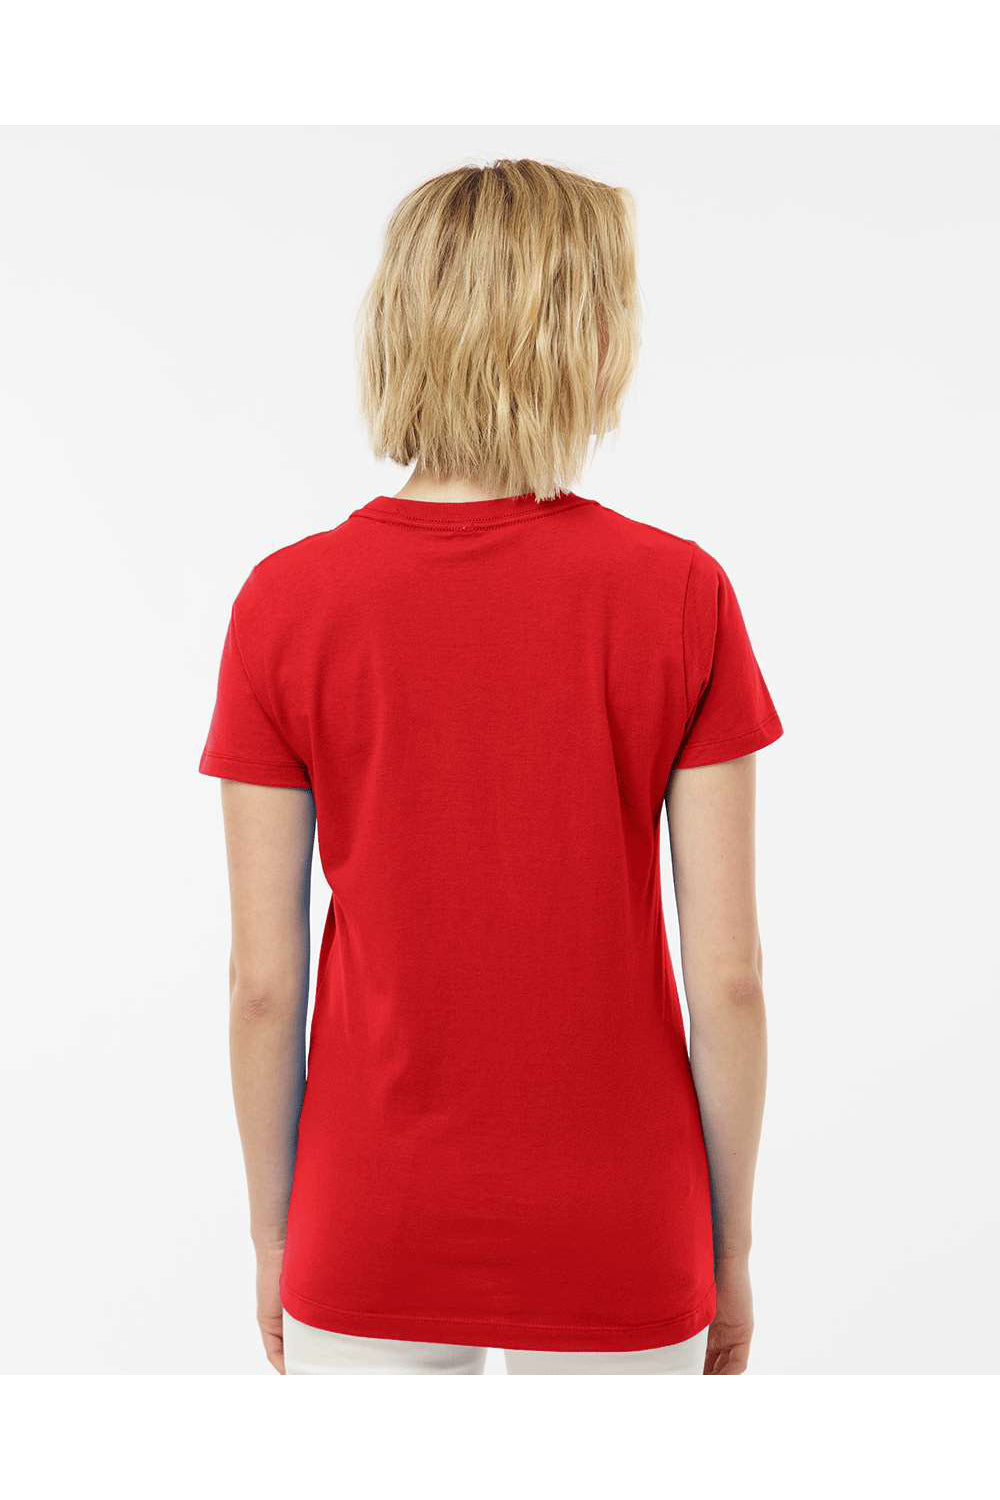 Tultex 516 Womens Premium Short Sleeve Crewneck T-Shirt Red Model Back